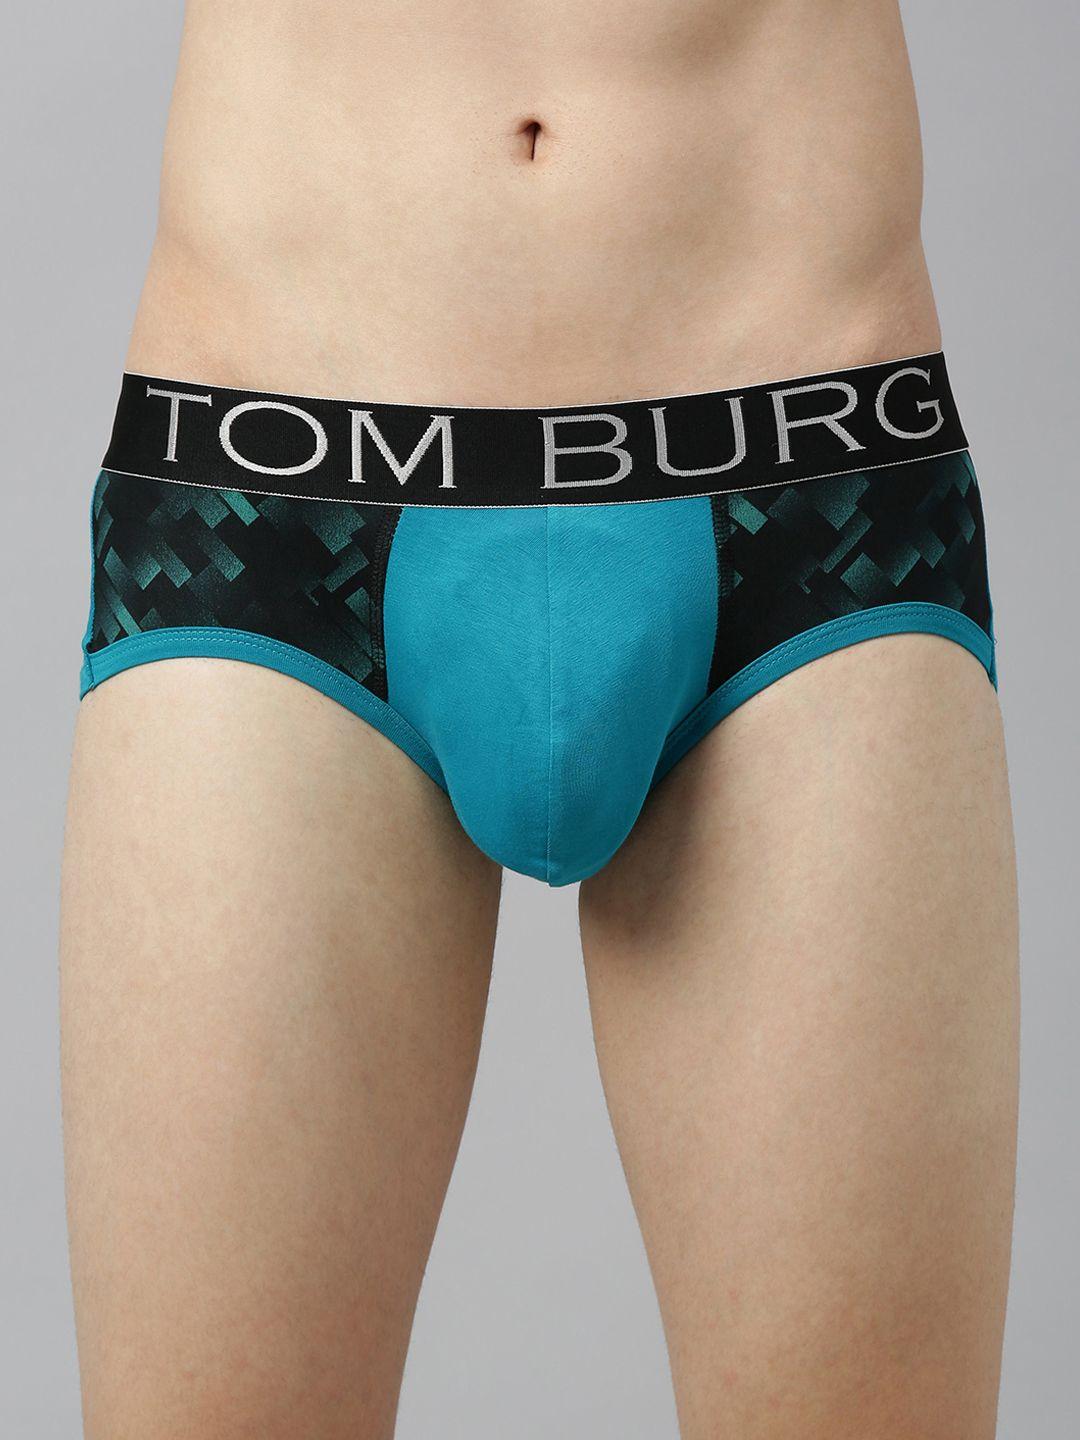 tom-burg-men-sea-green-&-black-colourblocked-brief-105